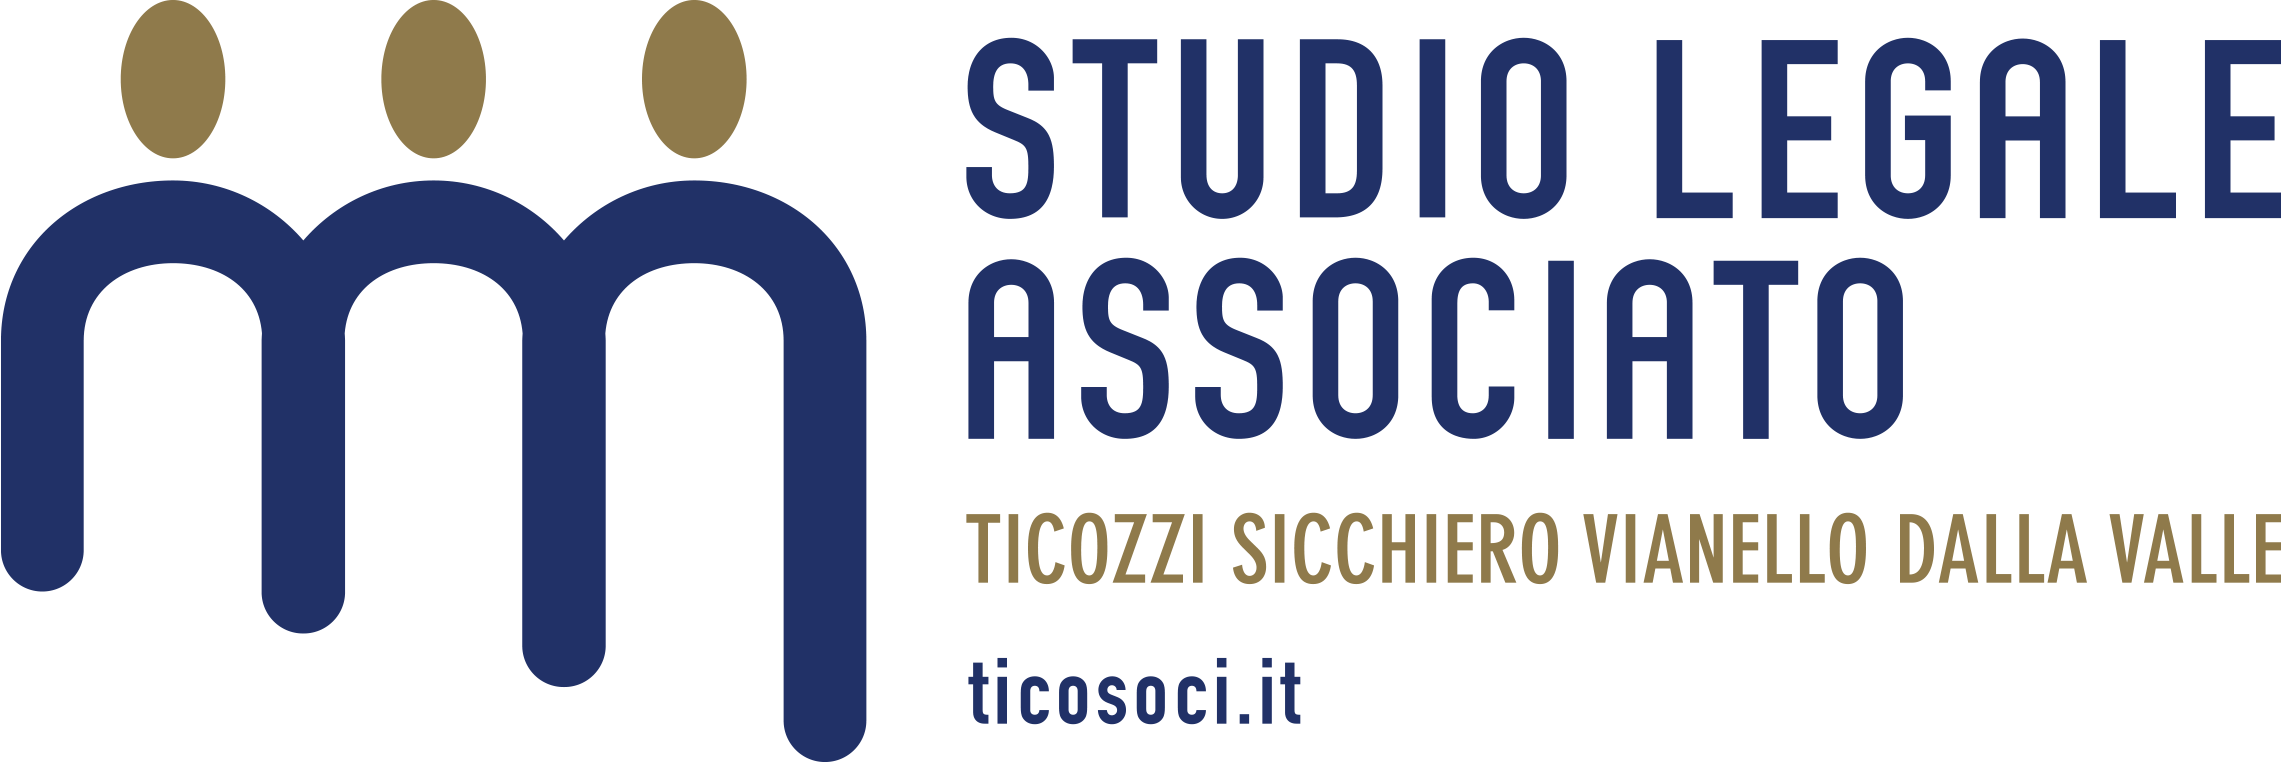 Ticozzo logo